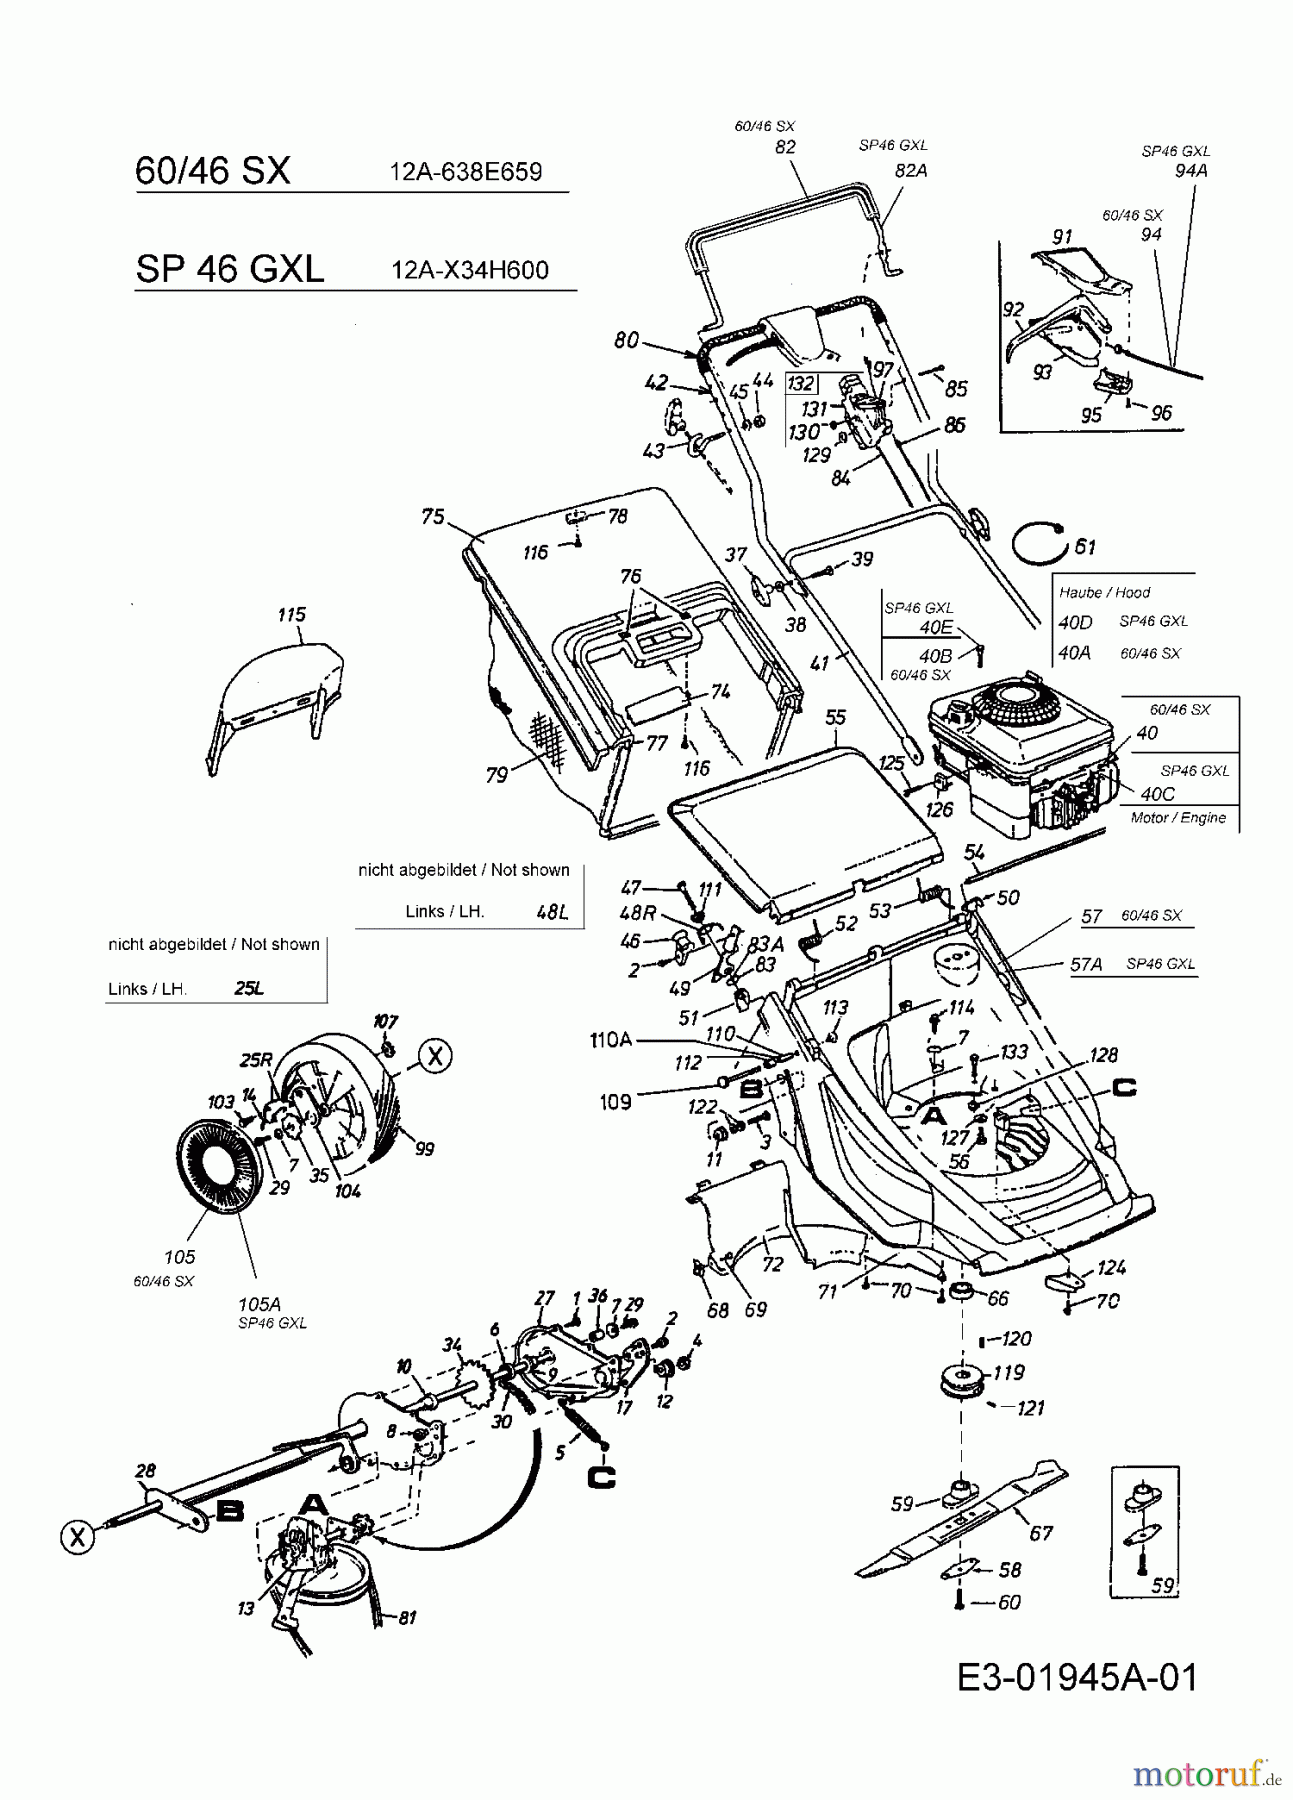  MTD Motormäher mit Antrieb SP 46 GXL 12A-X34H600  (2005) Grundgerät